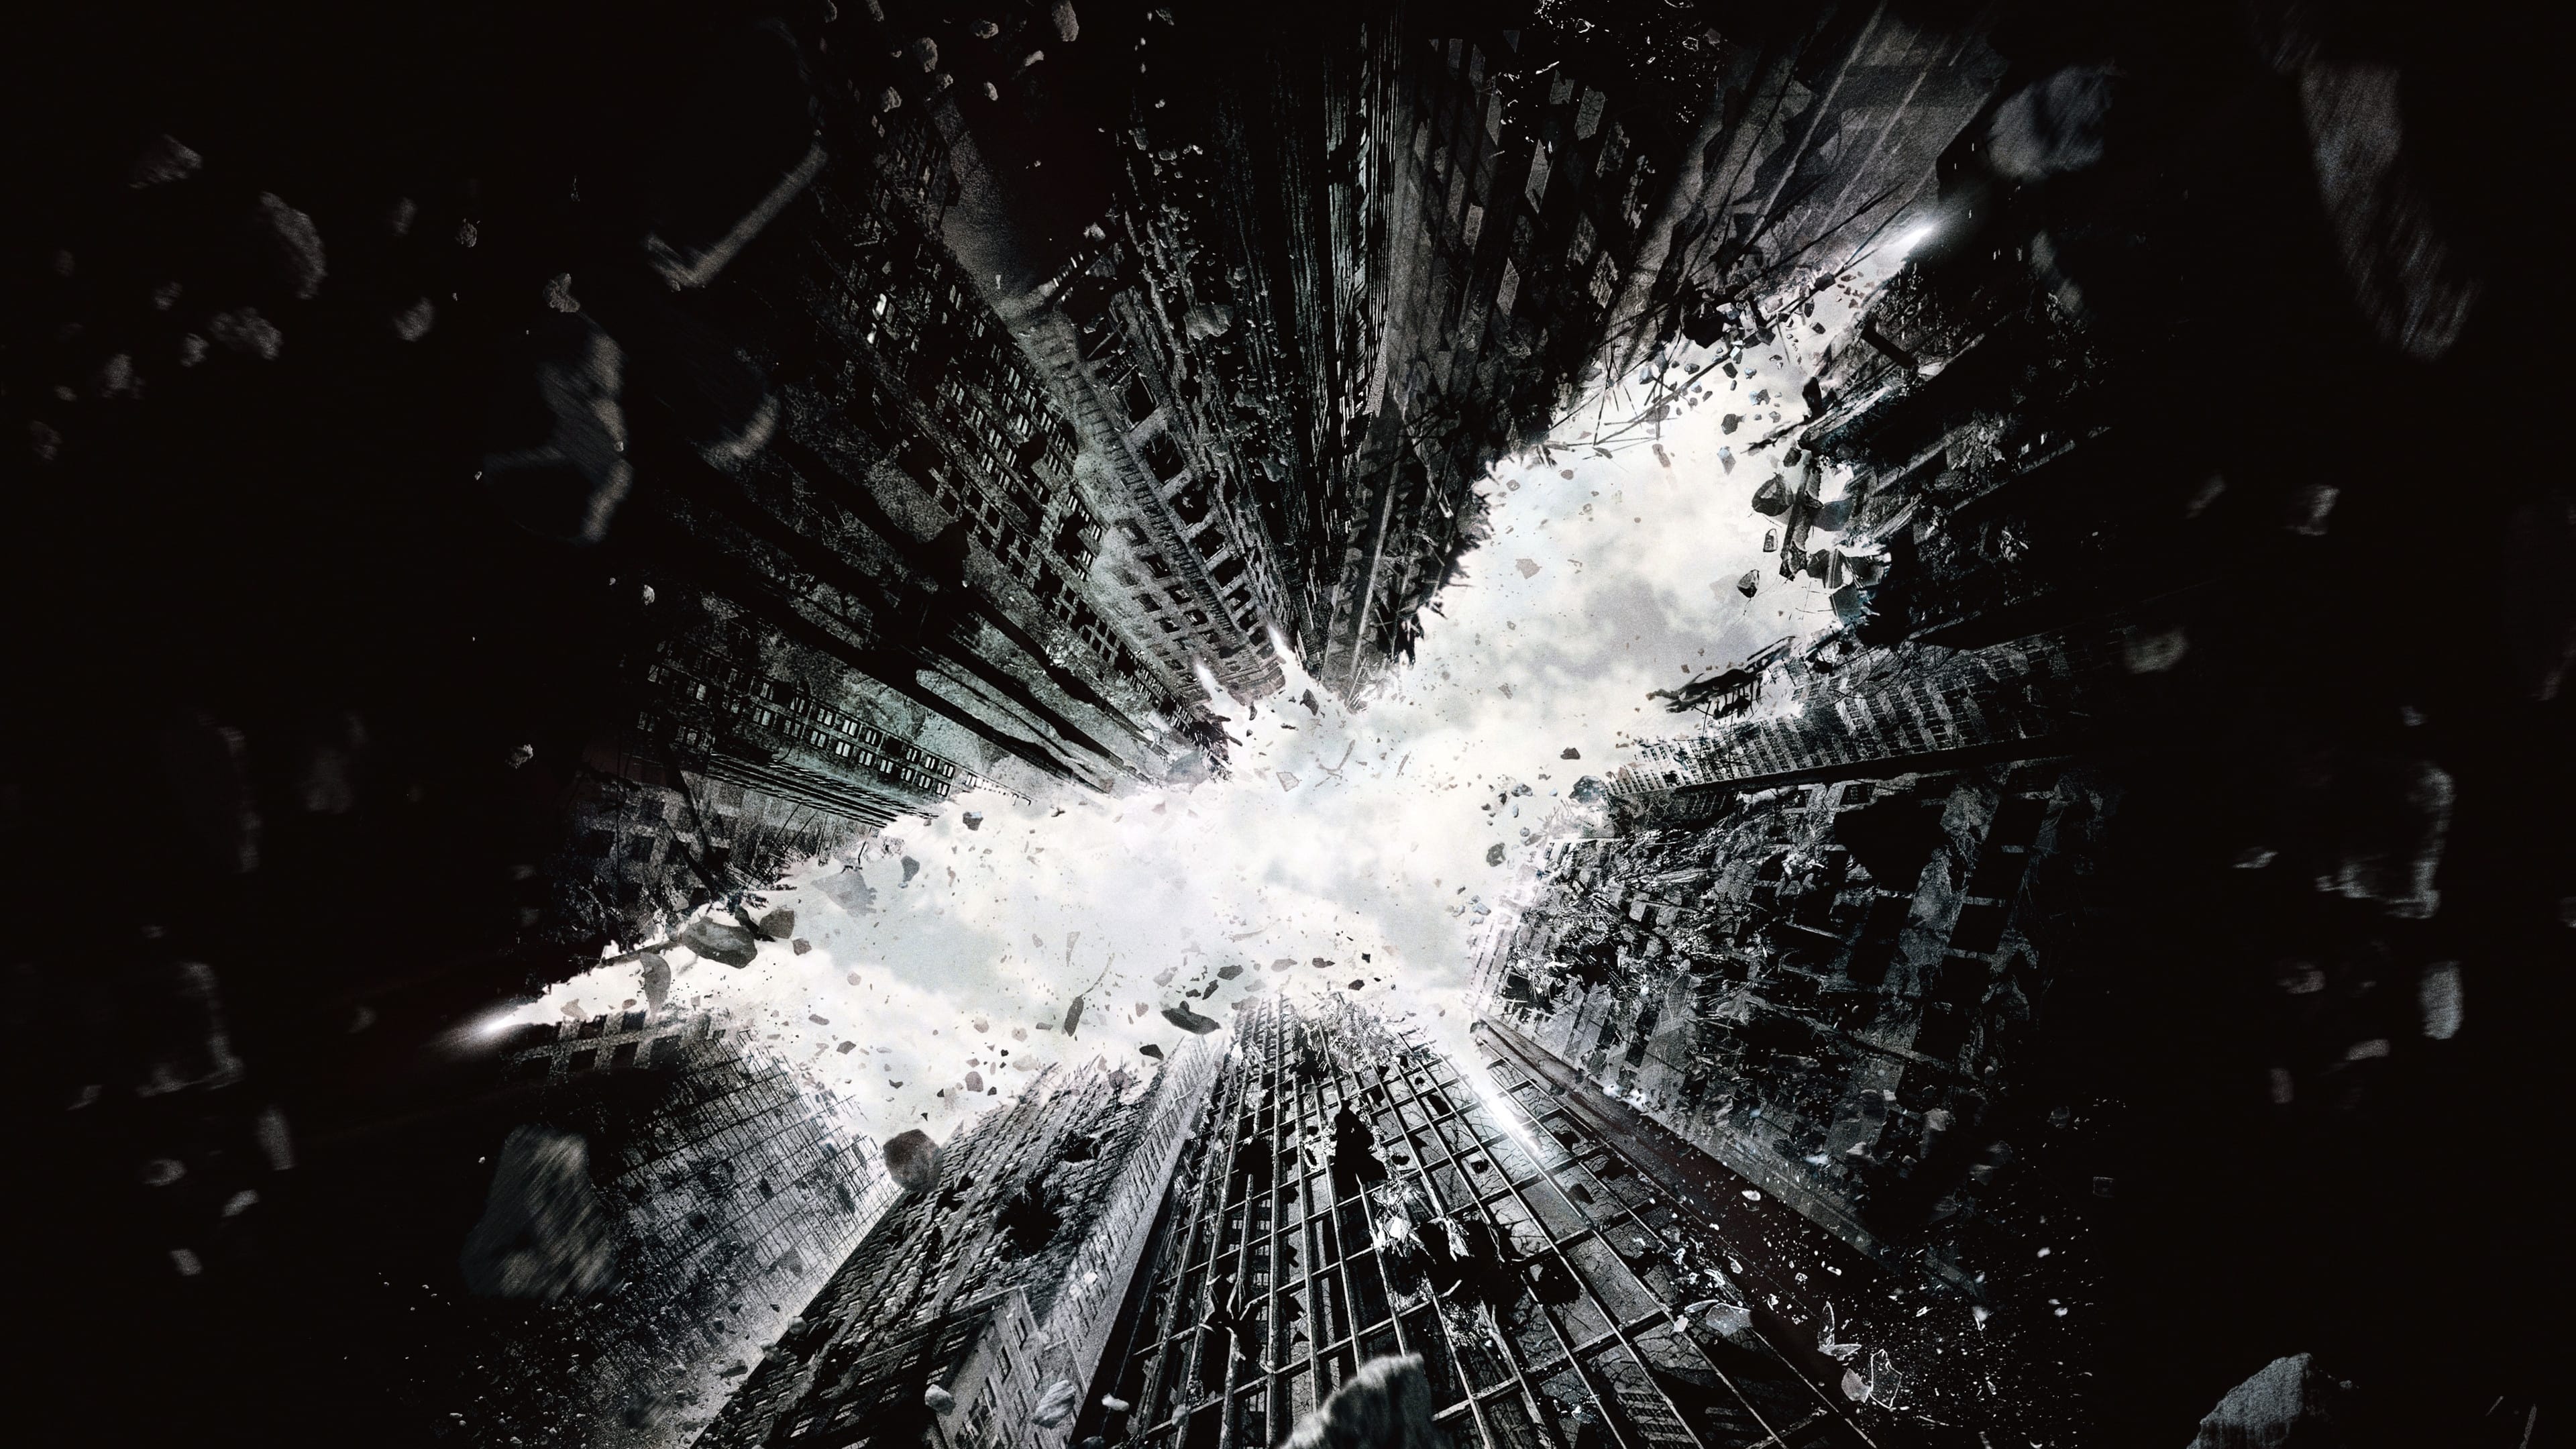 The Dark Knight Rises 2012 123movies